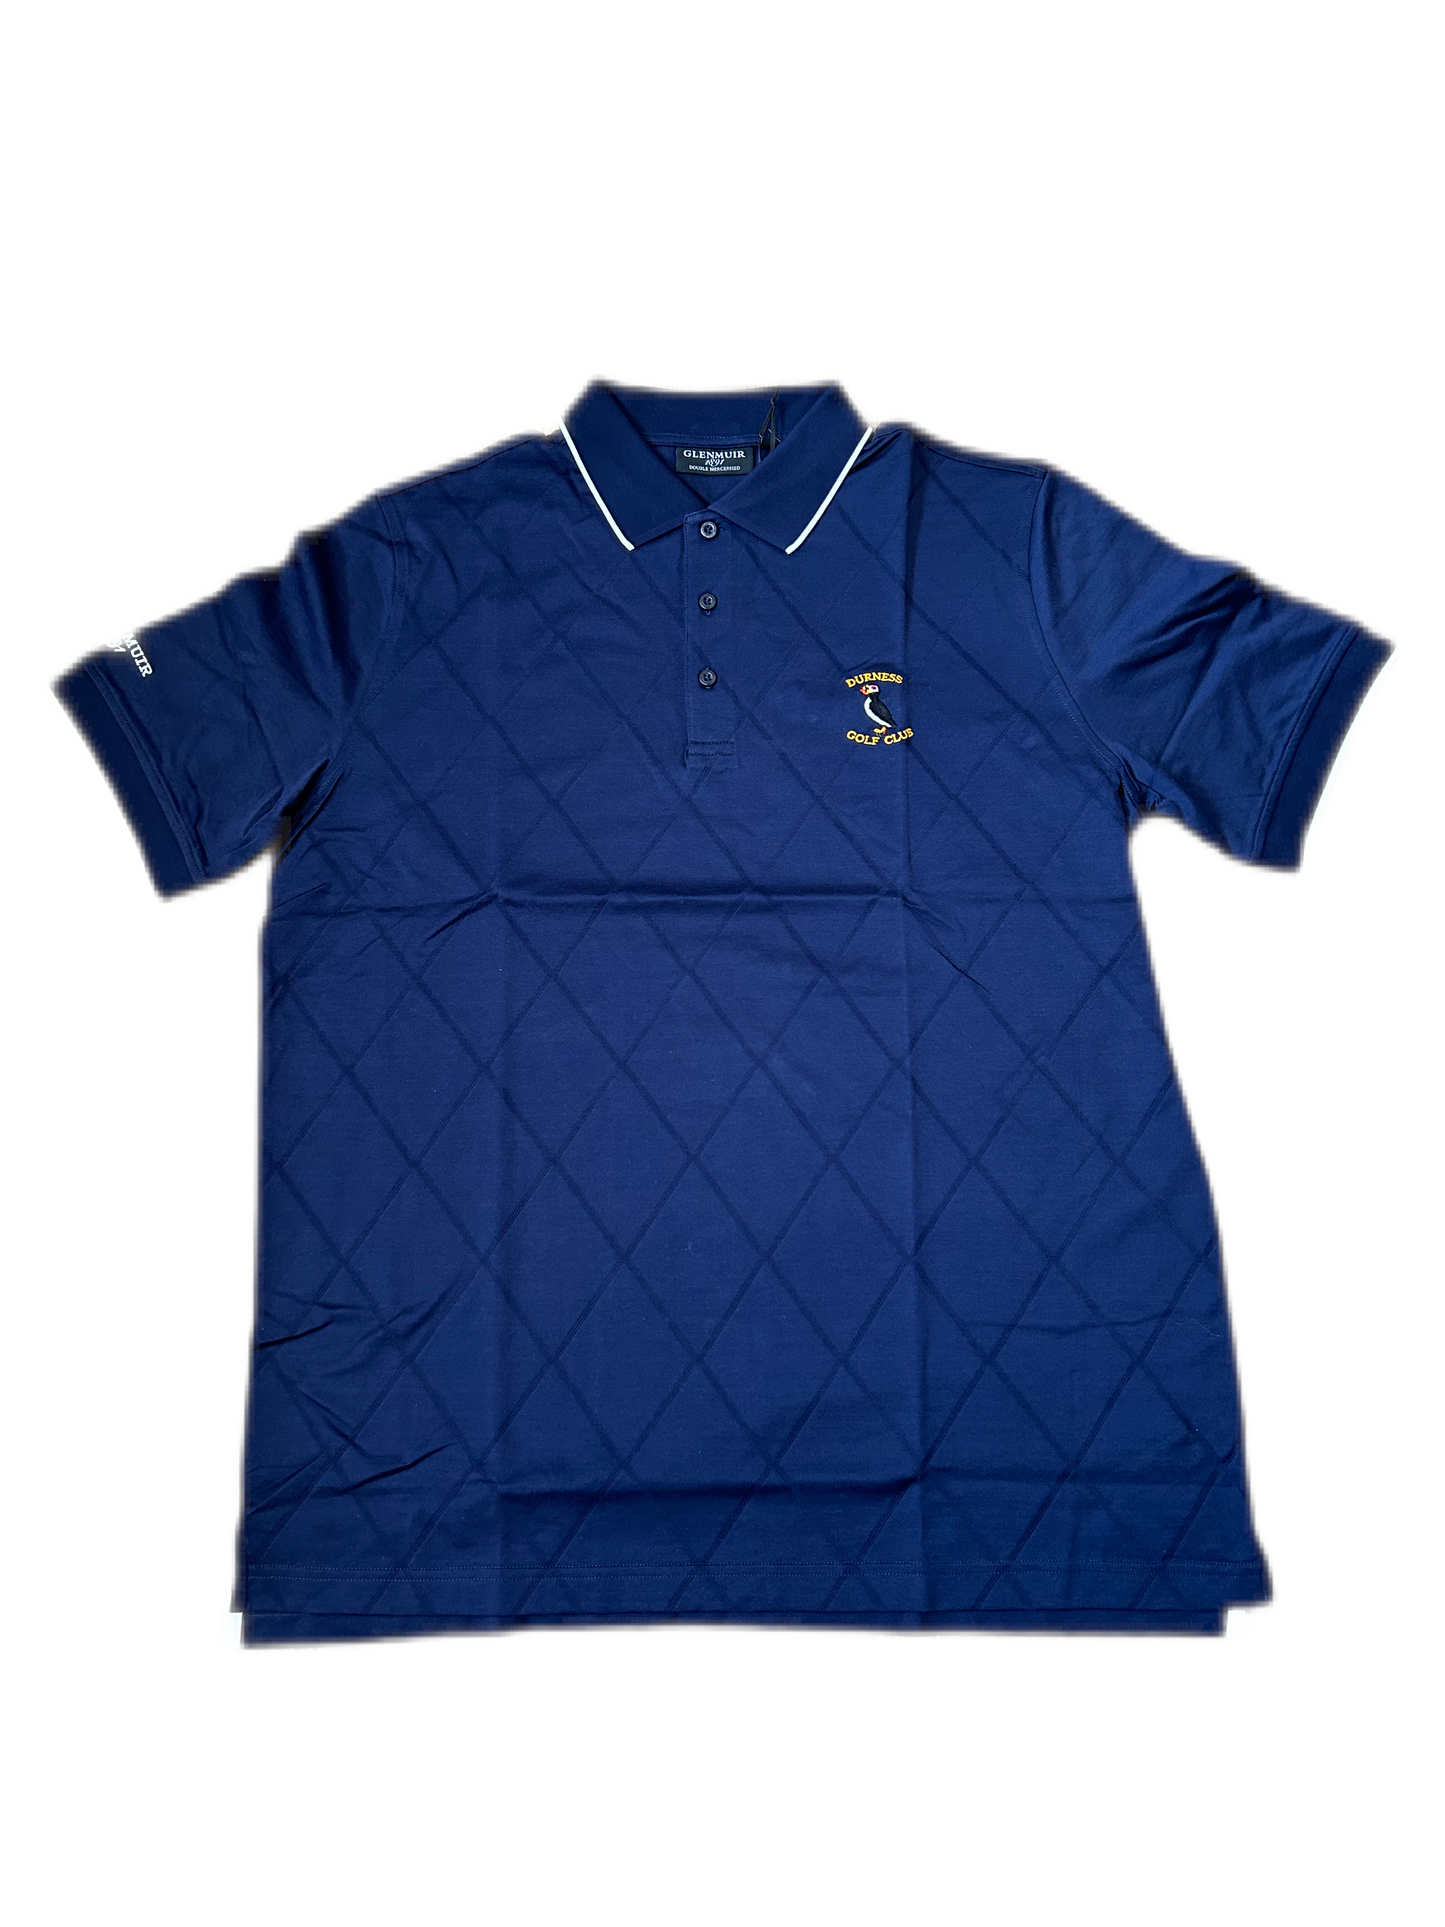 Glenmuir Keith Diamond Knit Mercerised Cotton Golf Shirt Navy/White